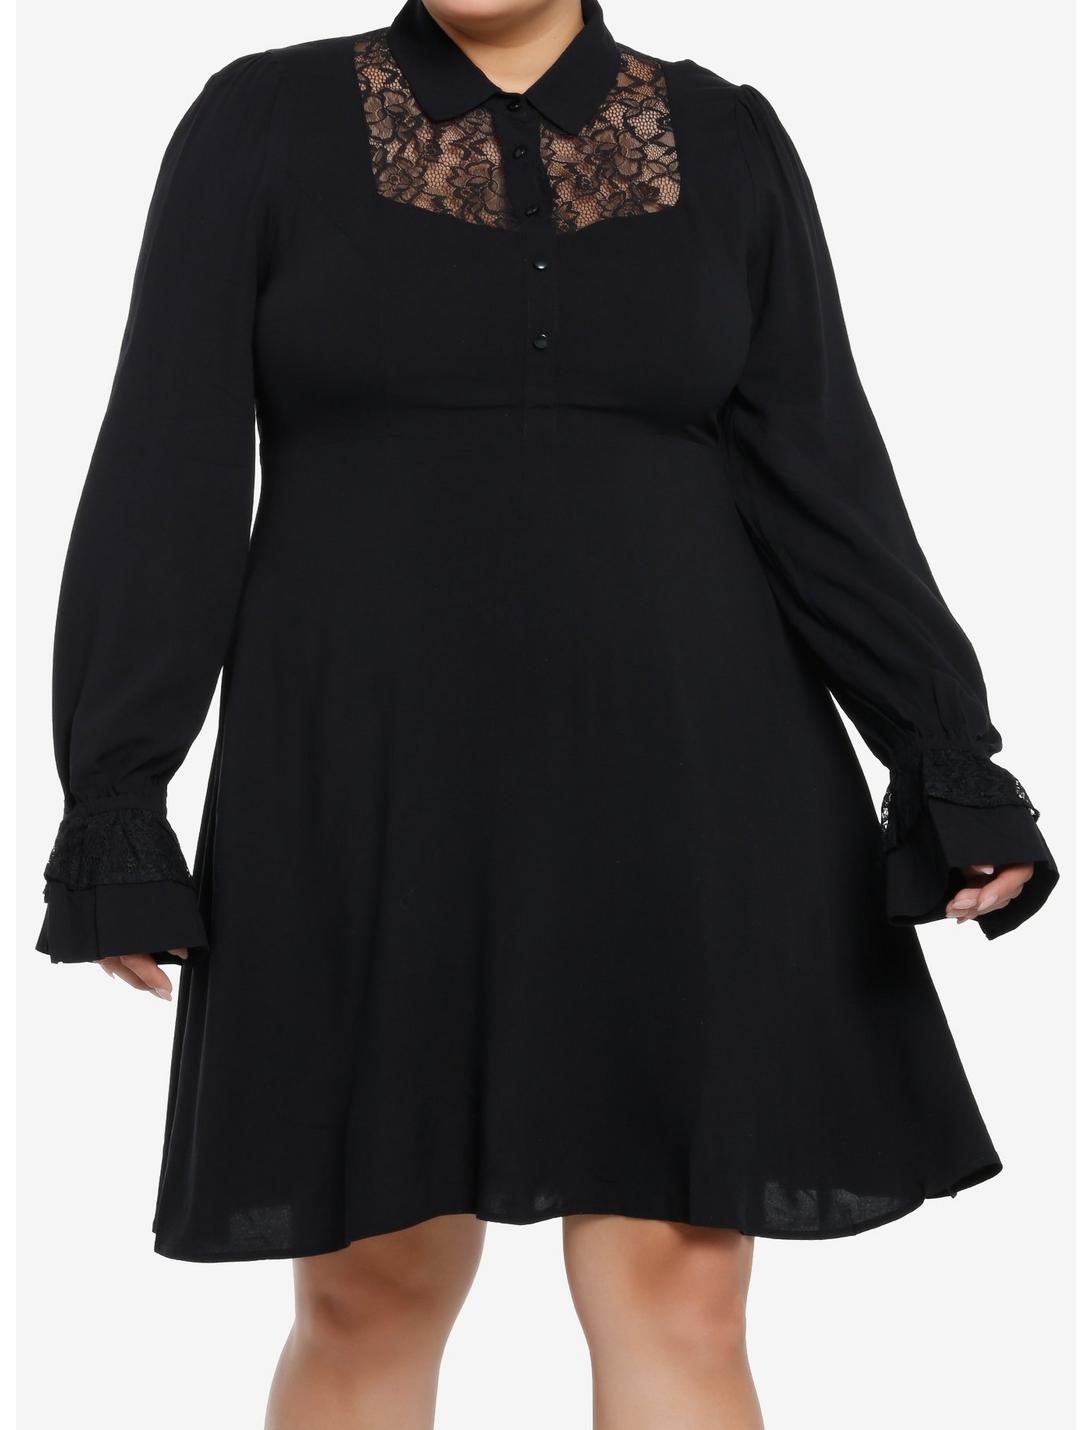 Black Lace Collared Dress Plus Size, BLACK, hi-res